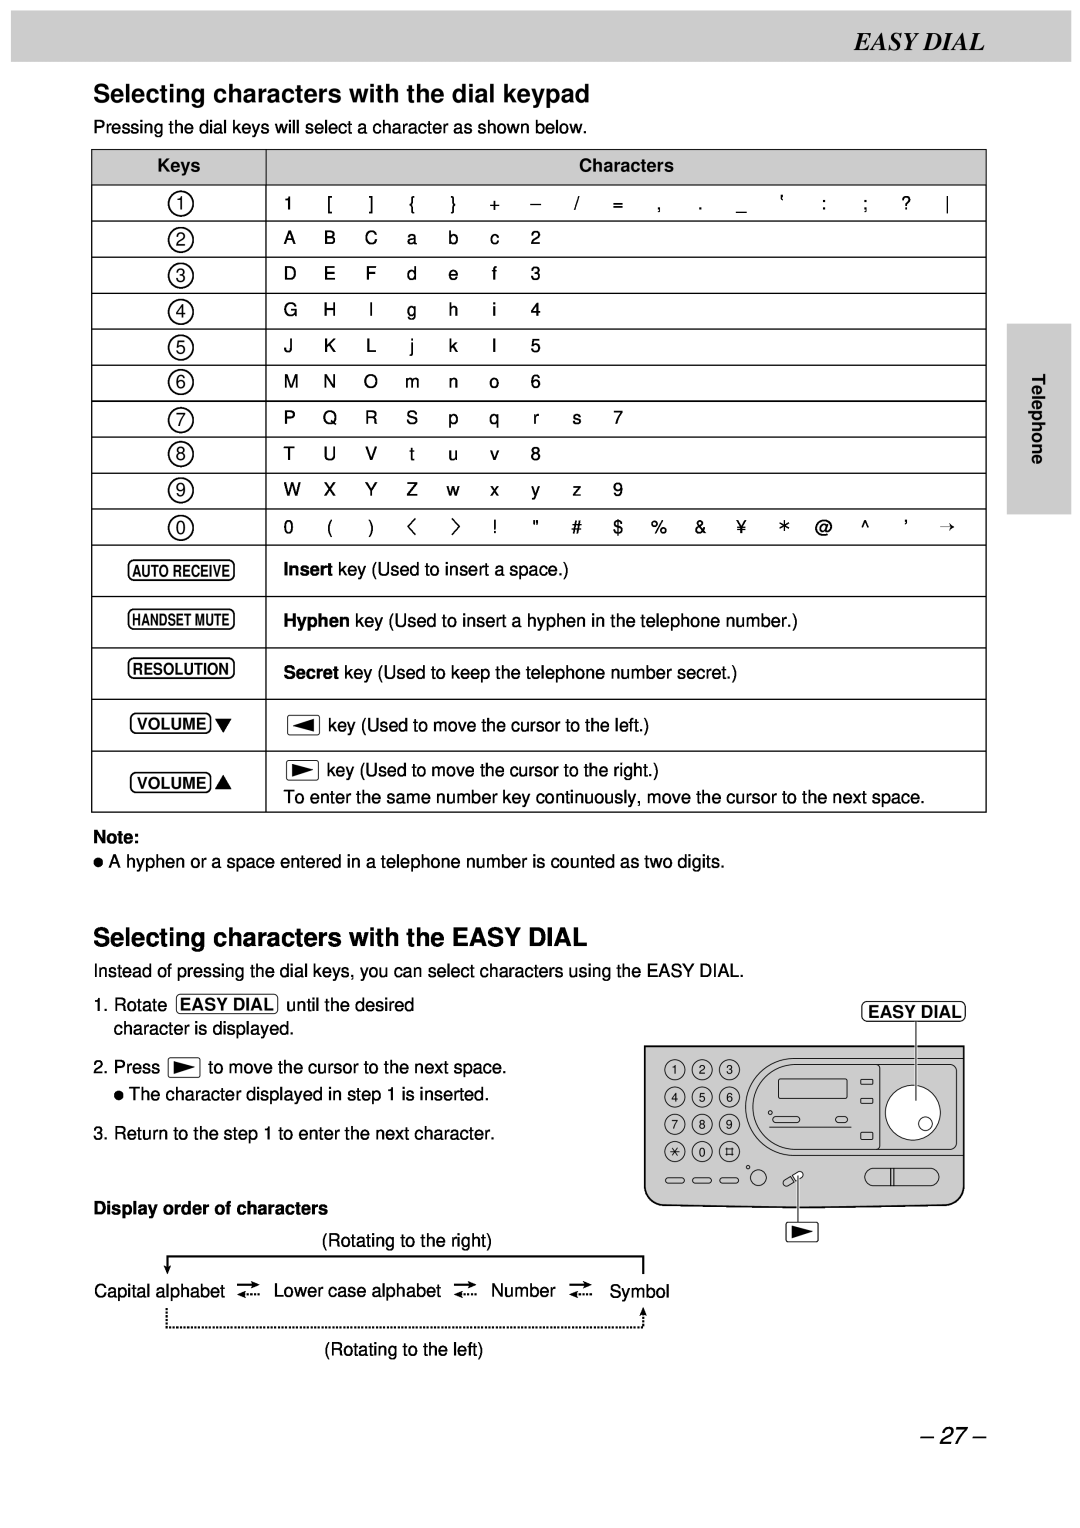 Panasonic KX-FT34HK Easy Dial, Selecting characters with the dial keypad, Selecting characters with the EASY DIAL 